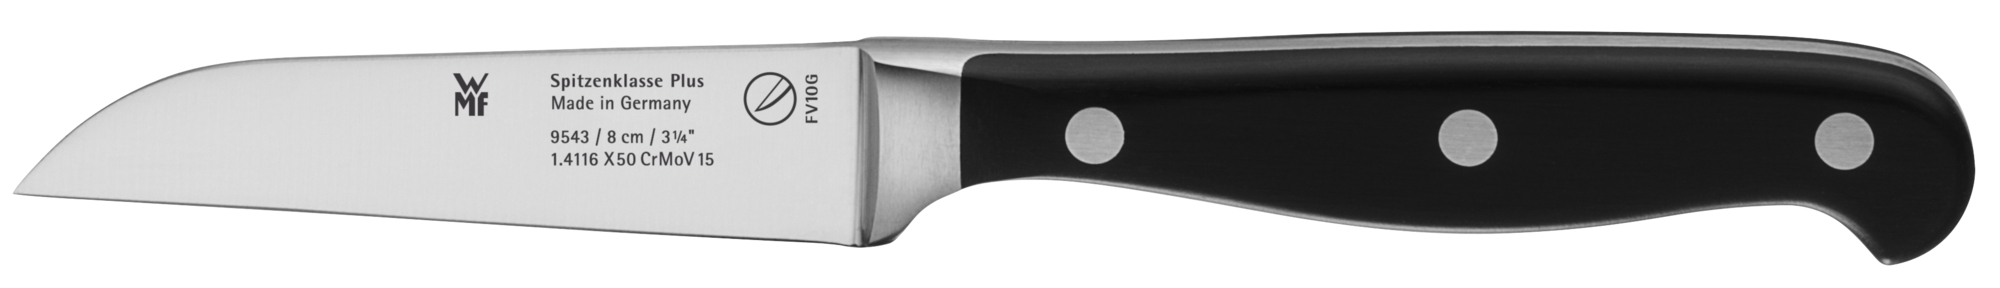 Овощной нож Spitzenklasse Plus 8 см нож для чистки овощей comfort k1298114